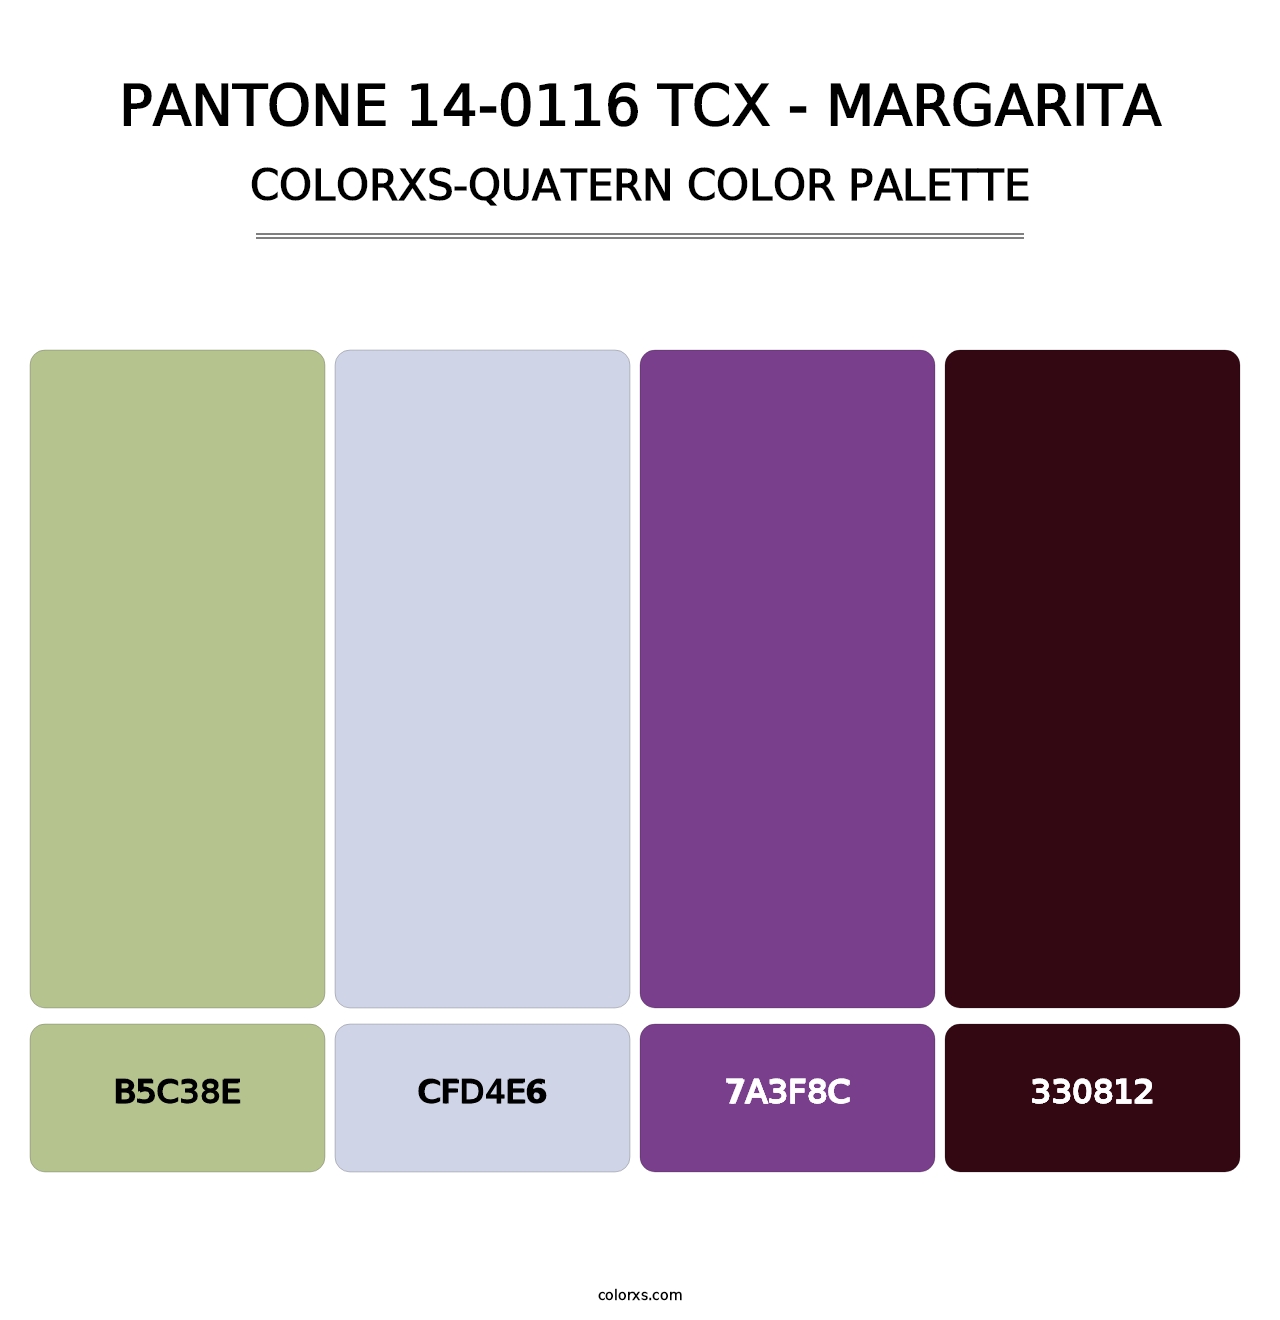 PANTONE 14-0116 TCX - Margarita - Colorxs Quatern Palette